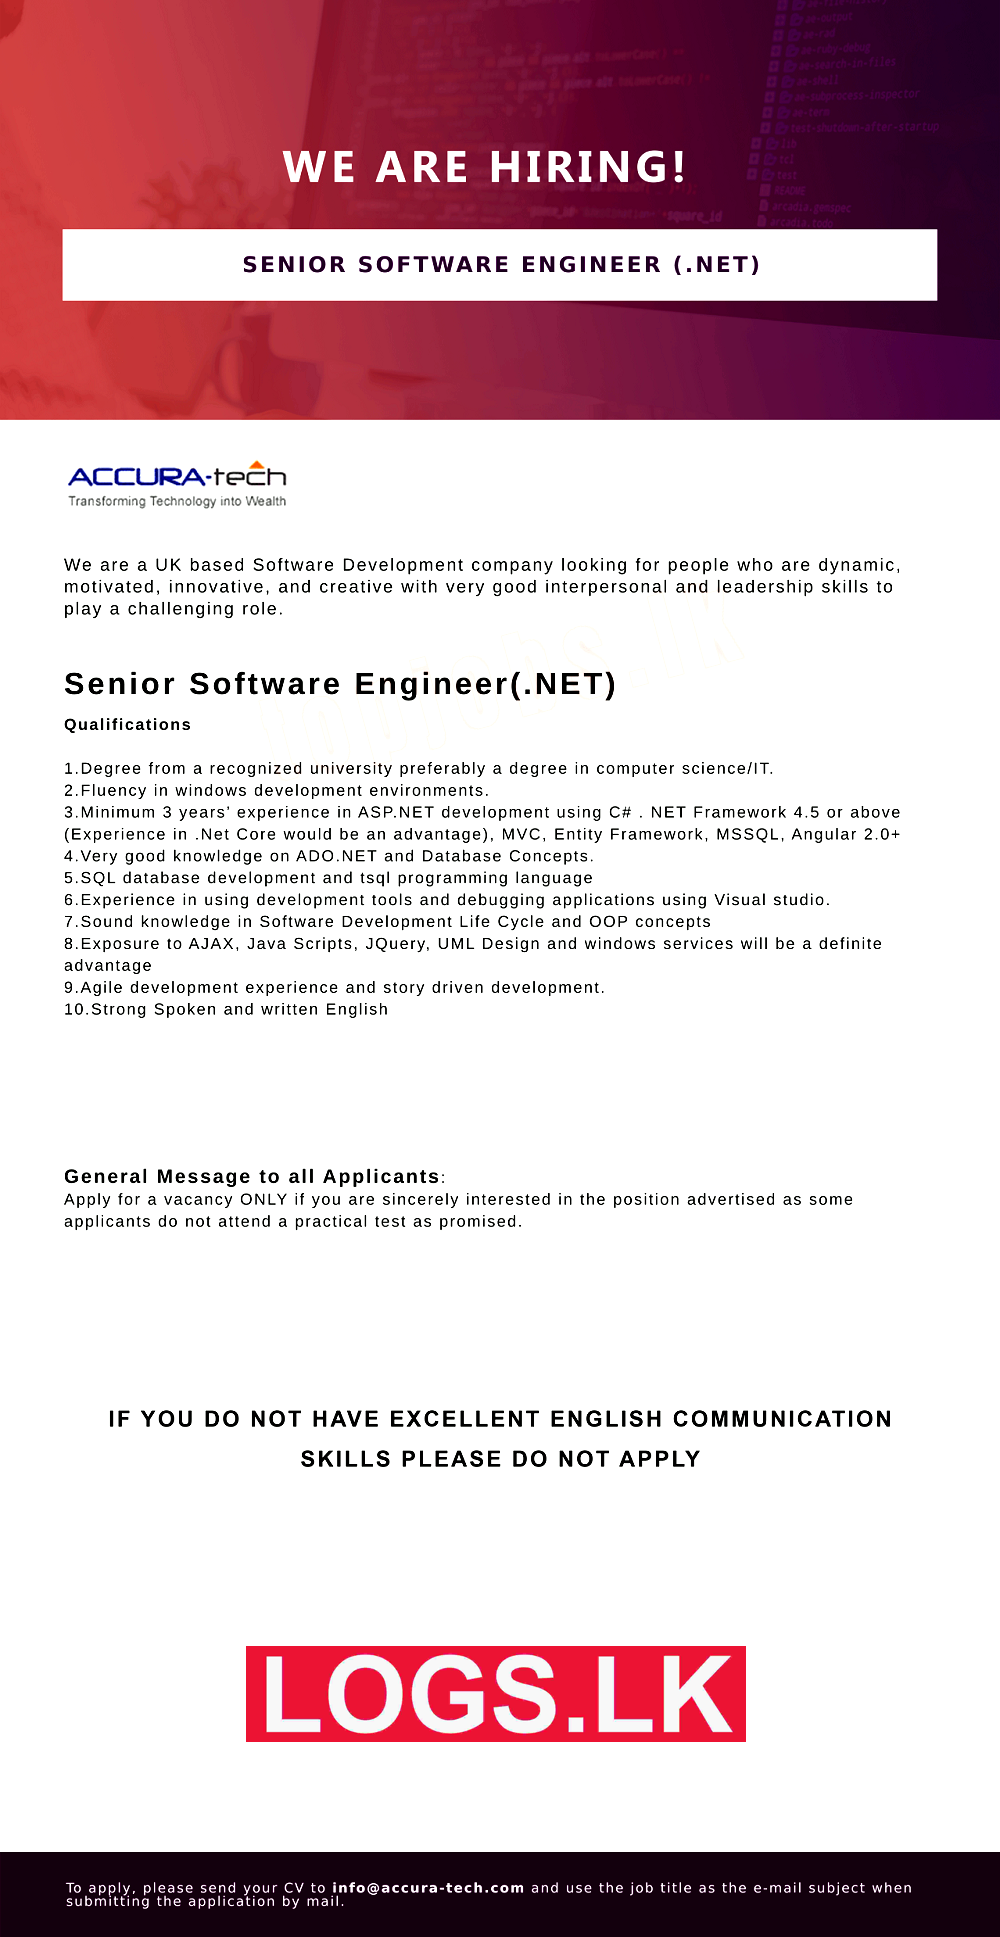 Senior Software Engineer Job Vacancies at Accura Tech Company Job Vacancies